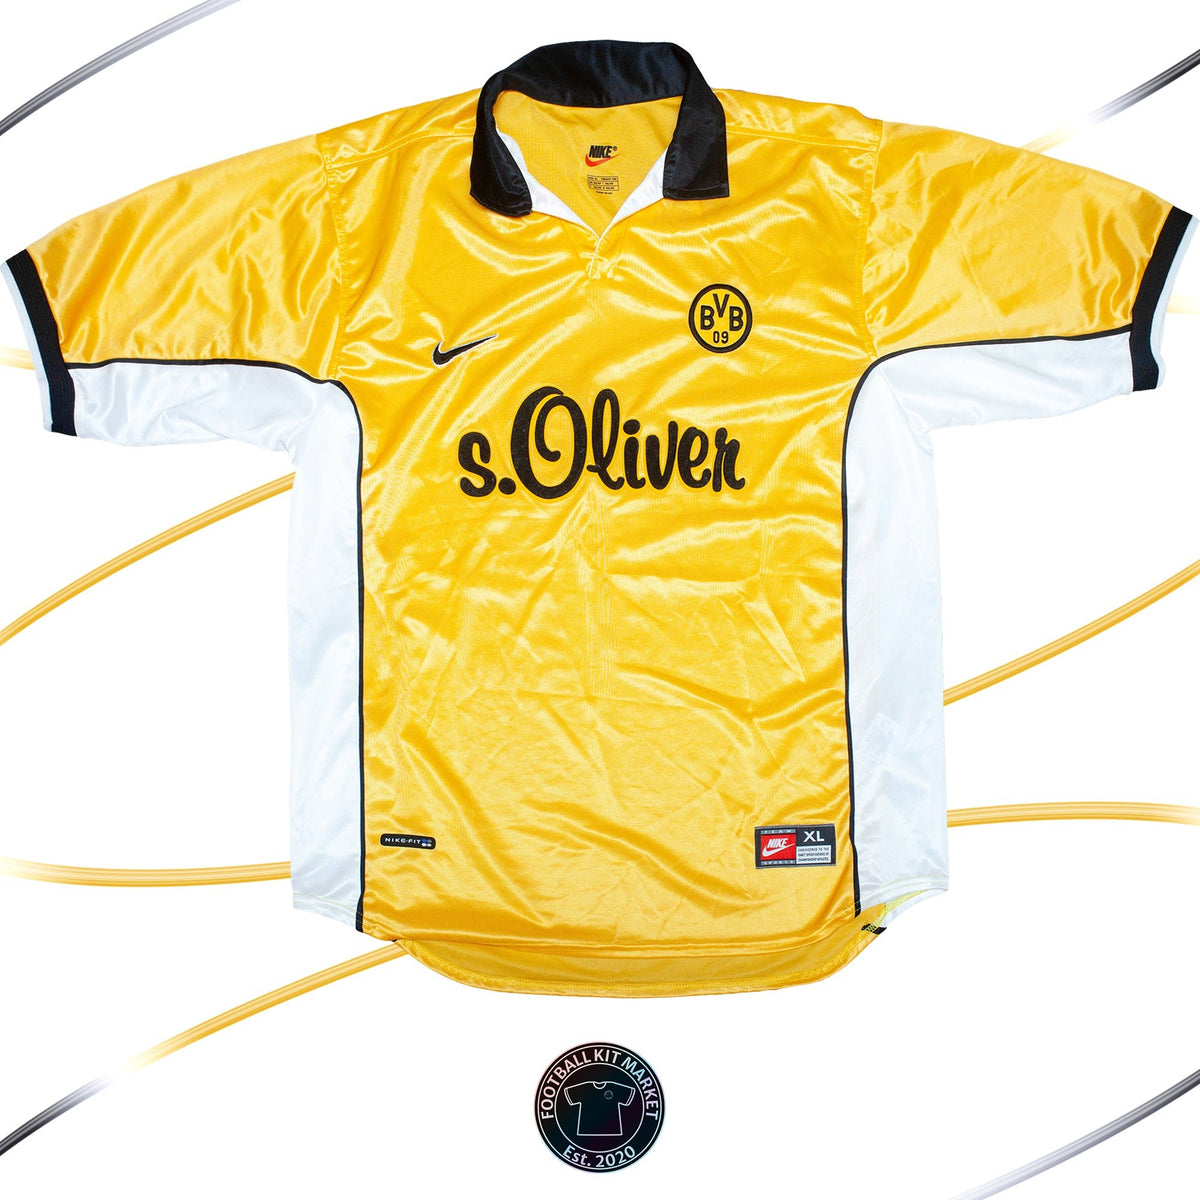 Genuine BORUSSIA DORTMUND Home Shirt (1998-2000) - NIKE (XL) - Product Image from Football Kit Market